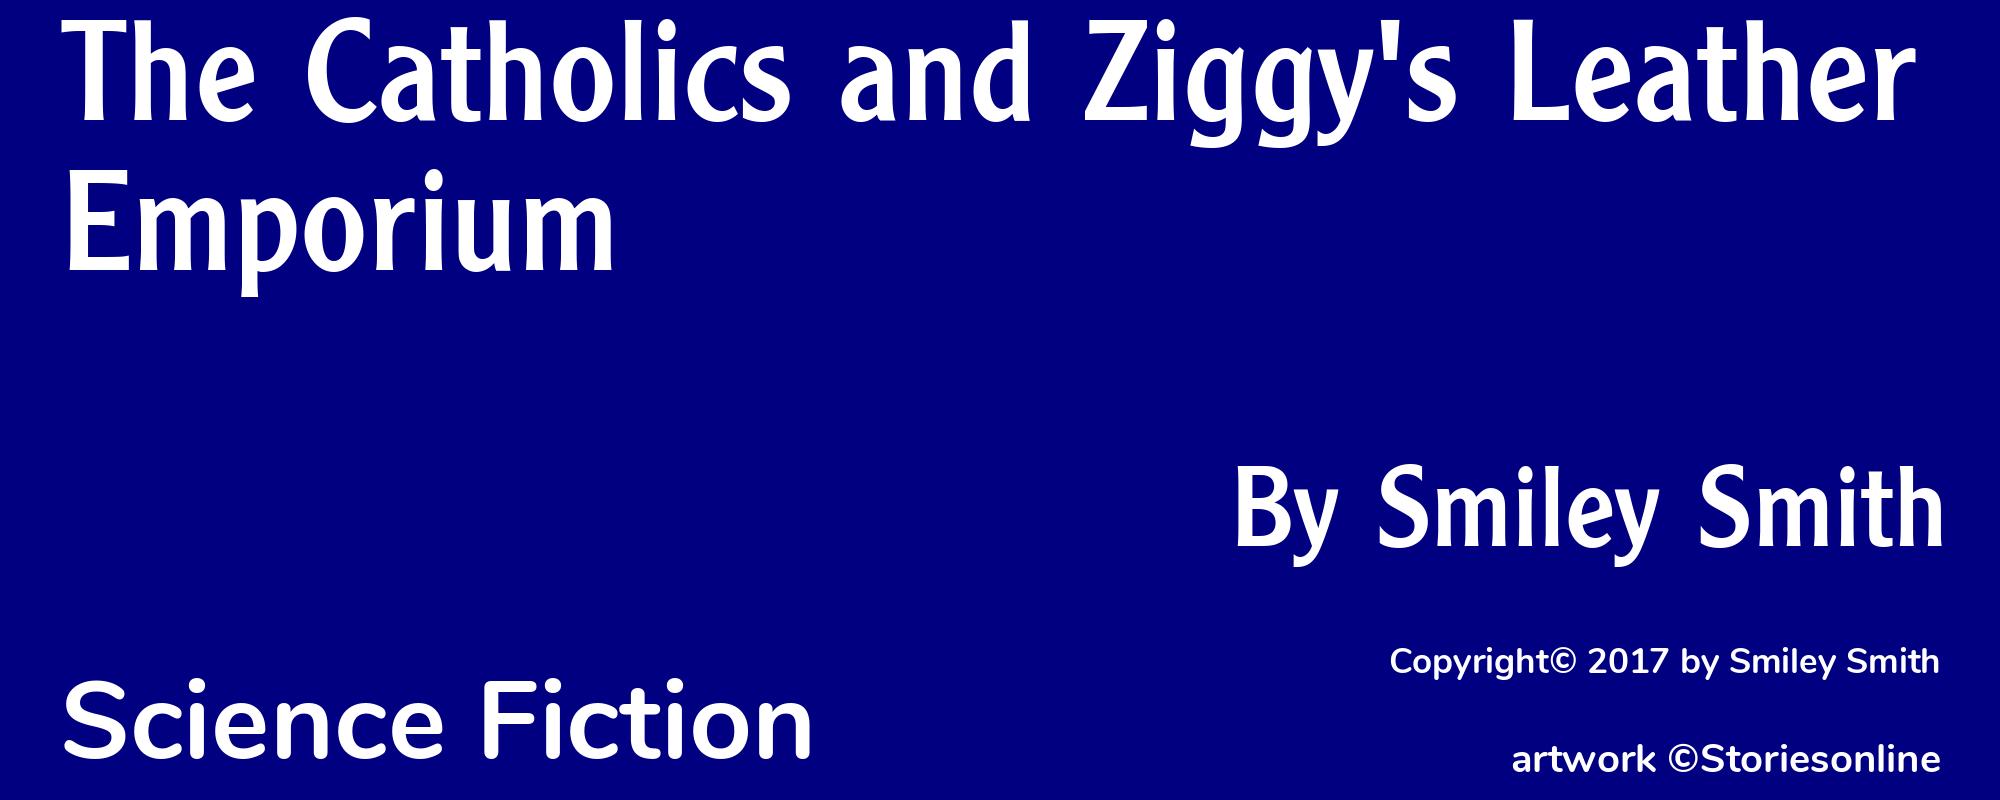 The Catholics and Ziggy's Leather Emporium - Cover